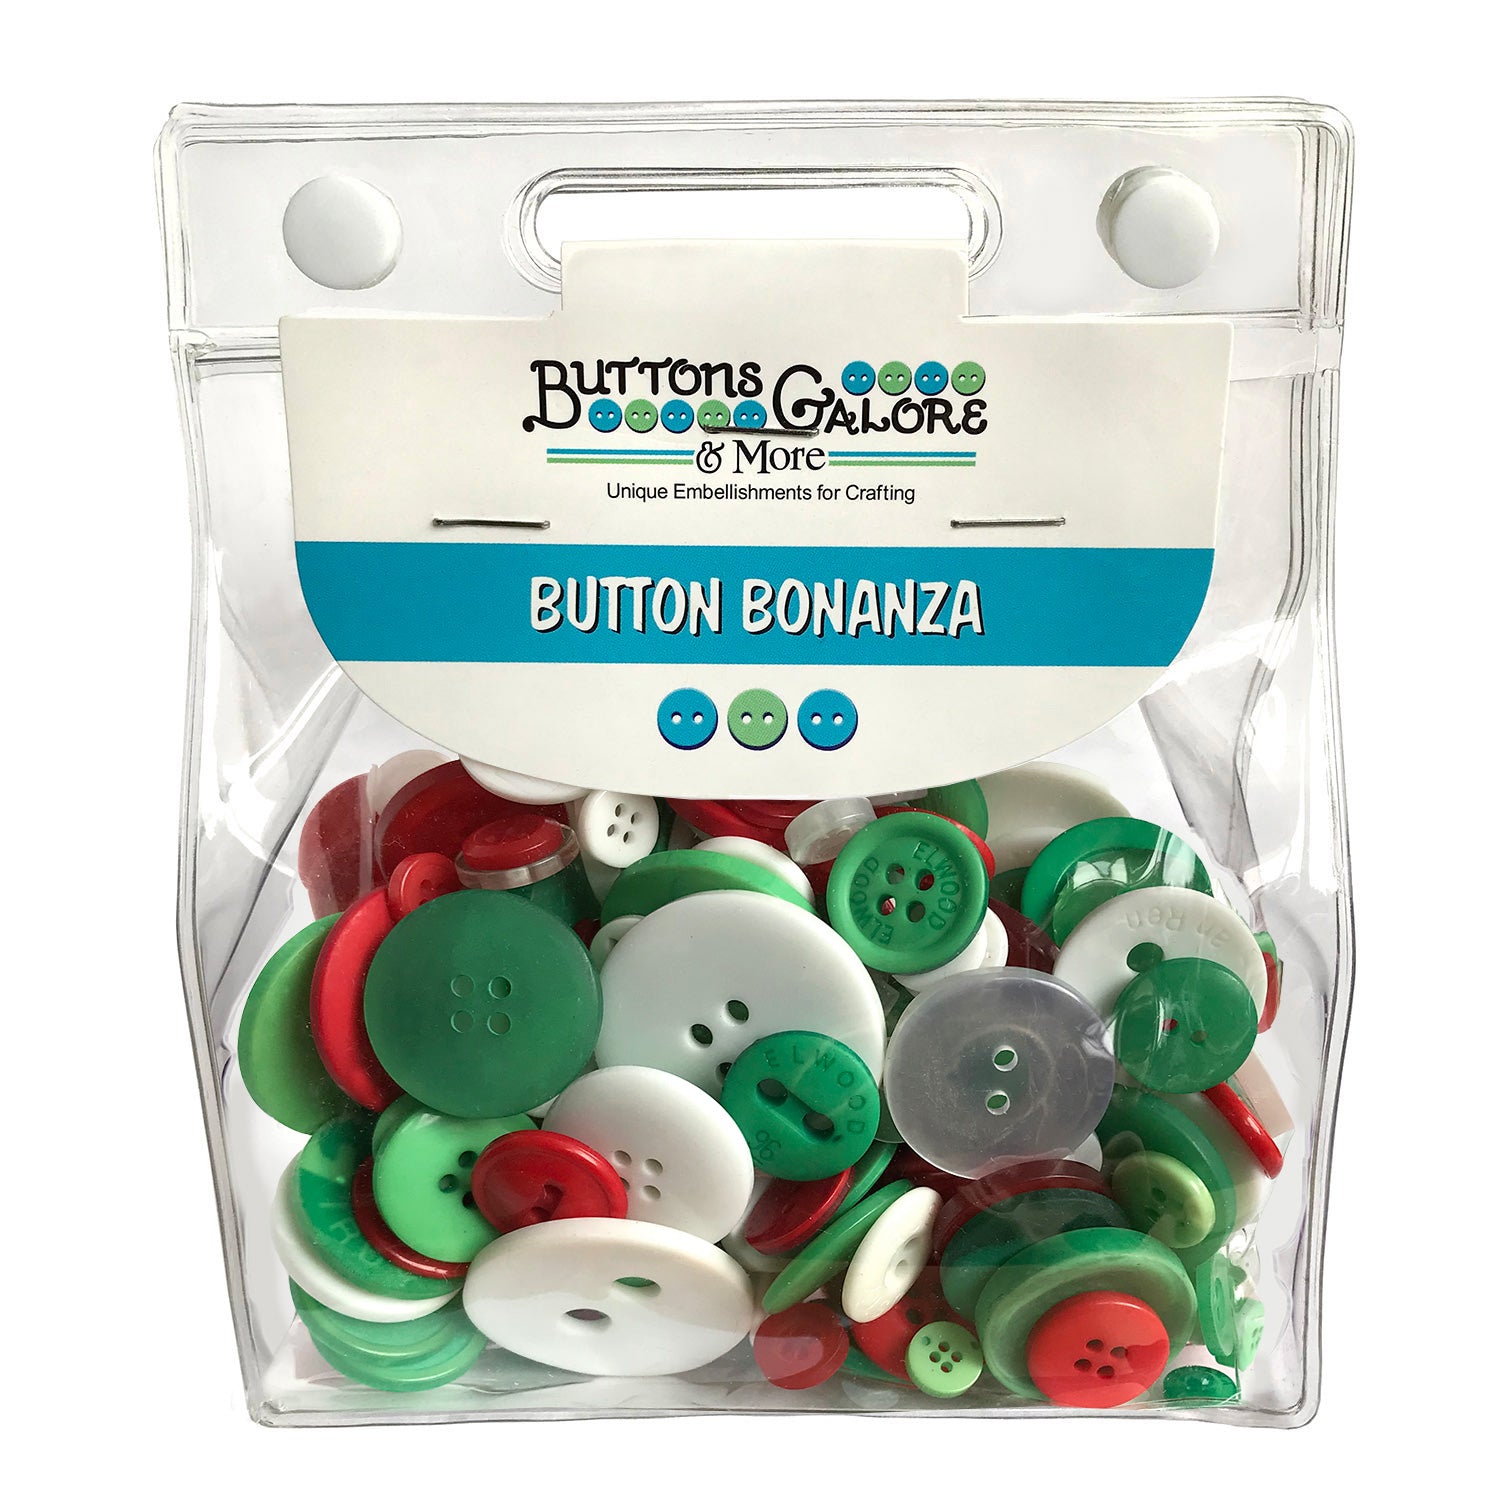 Christmas Red Bulk Buttons